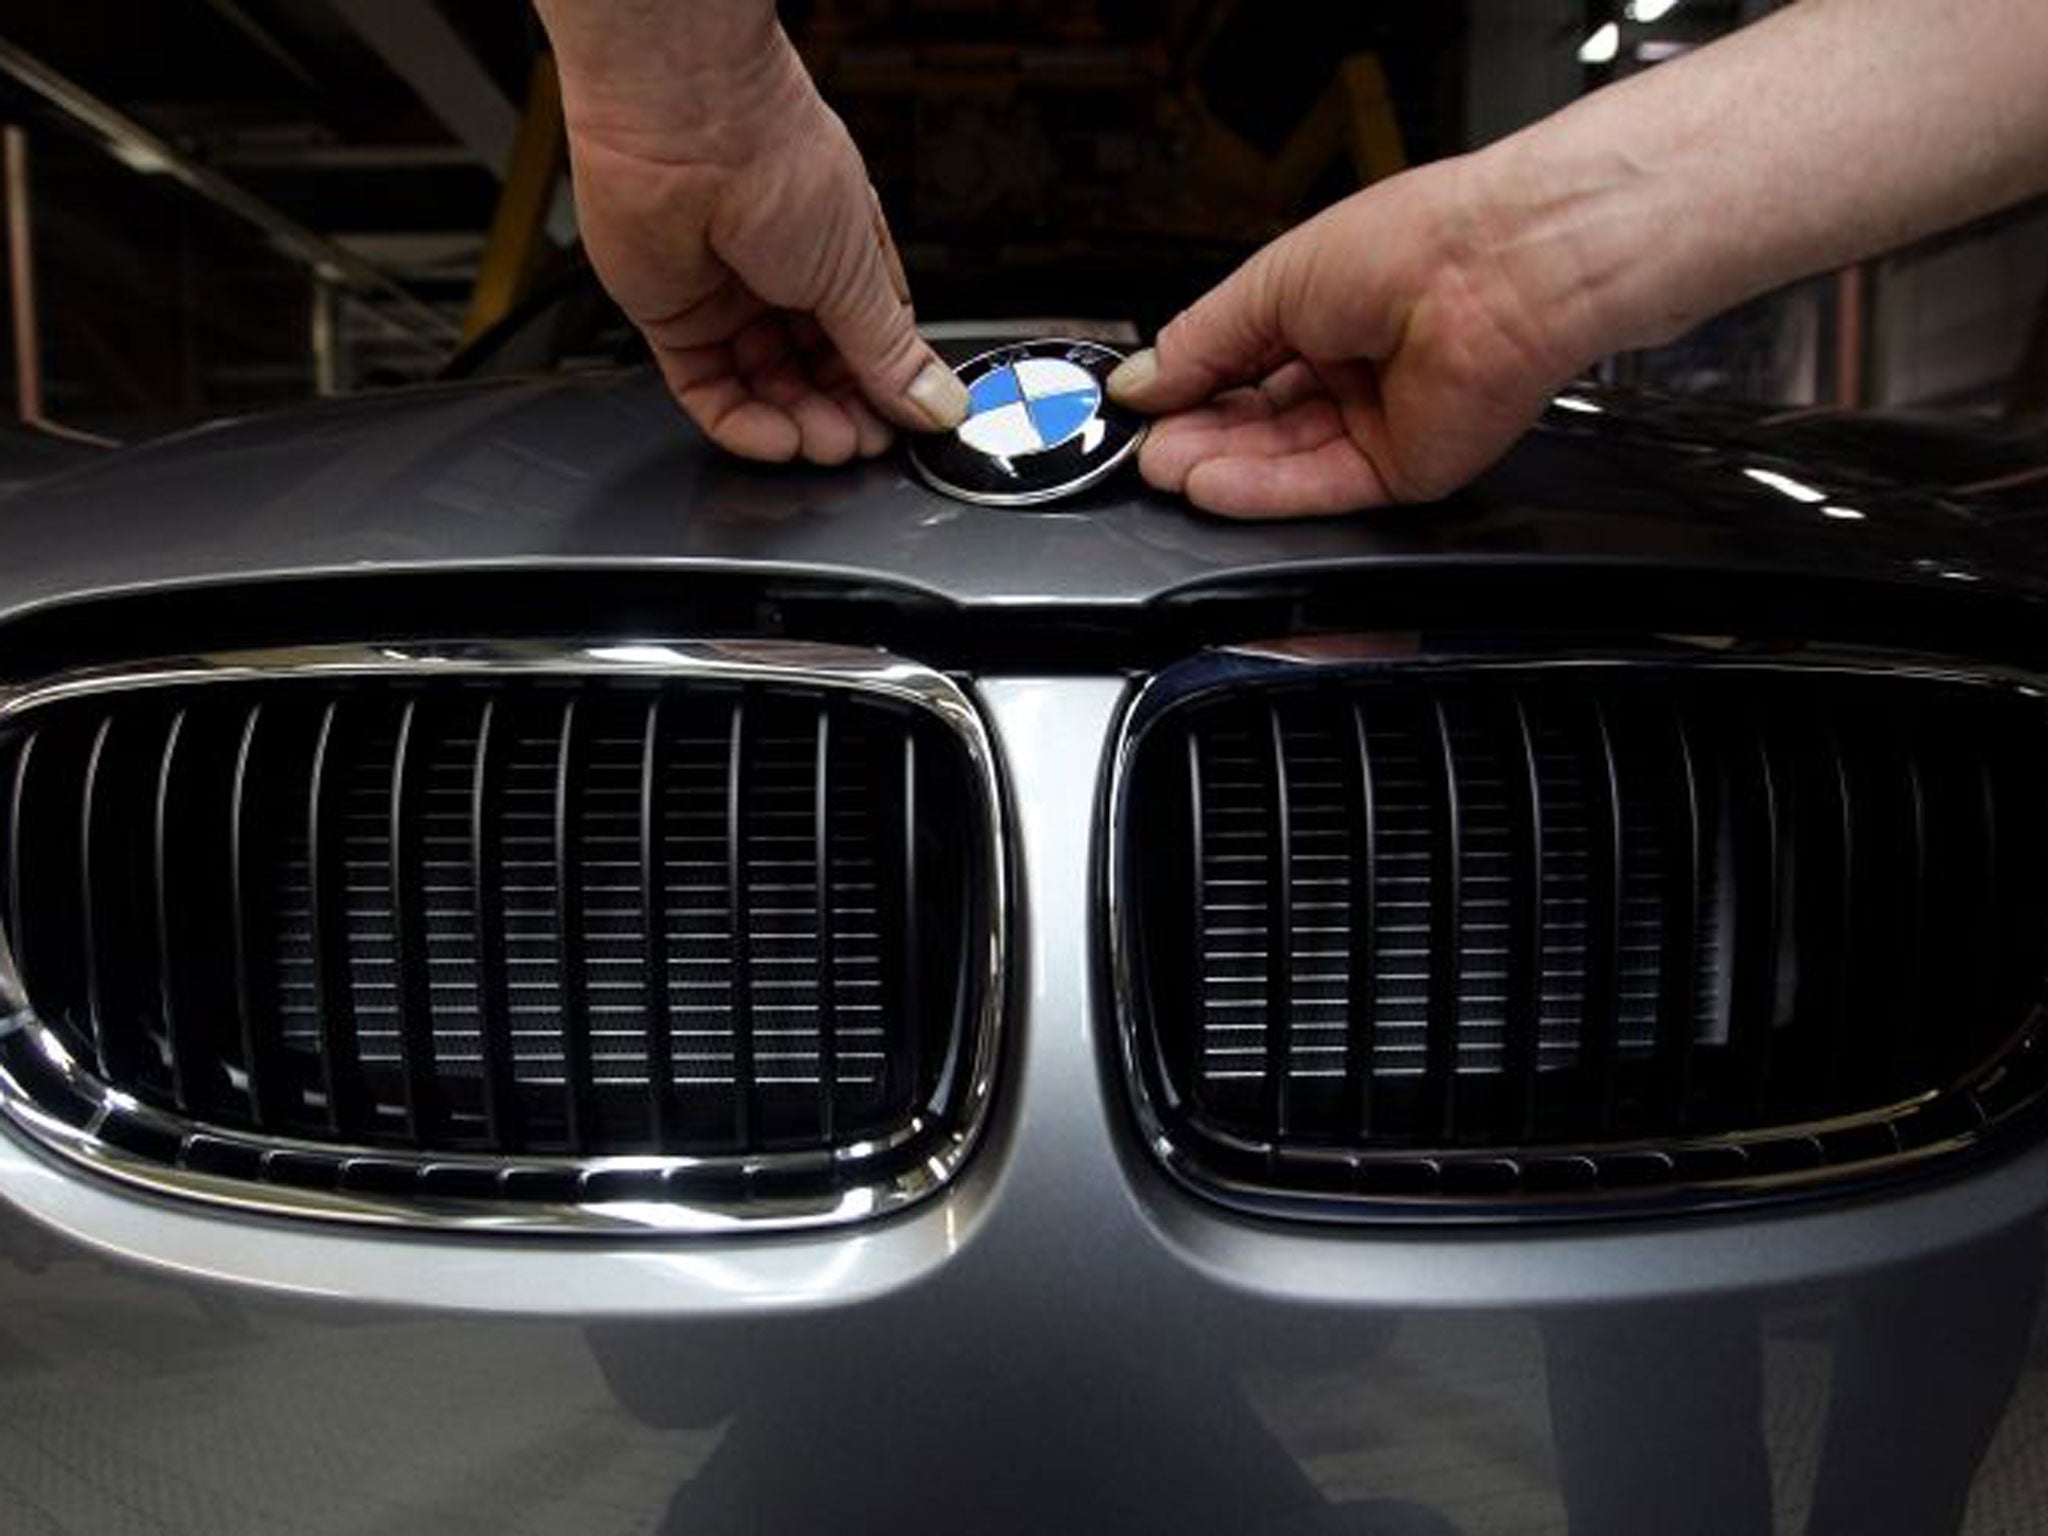 Eurozone companies such as BMW still have a global footprint